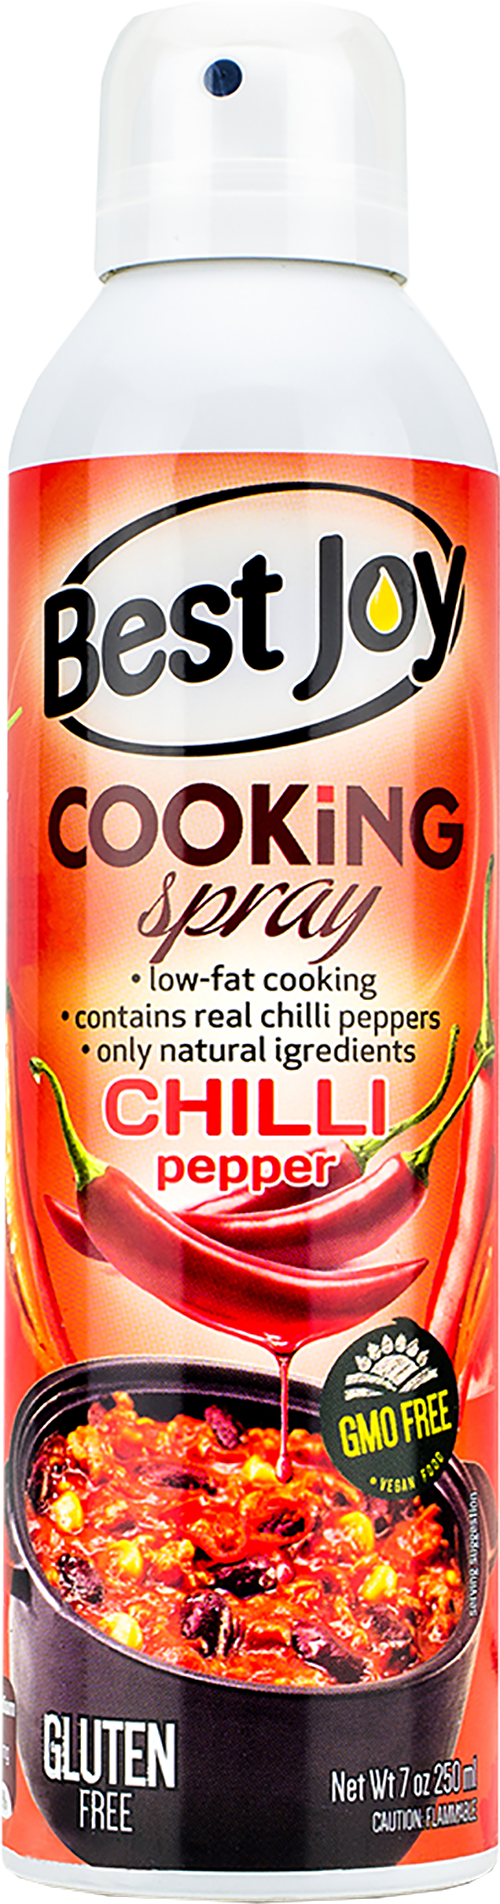 Chilli / Cooking Spray - BadiZdrav.BG